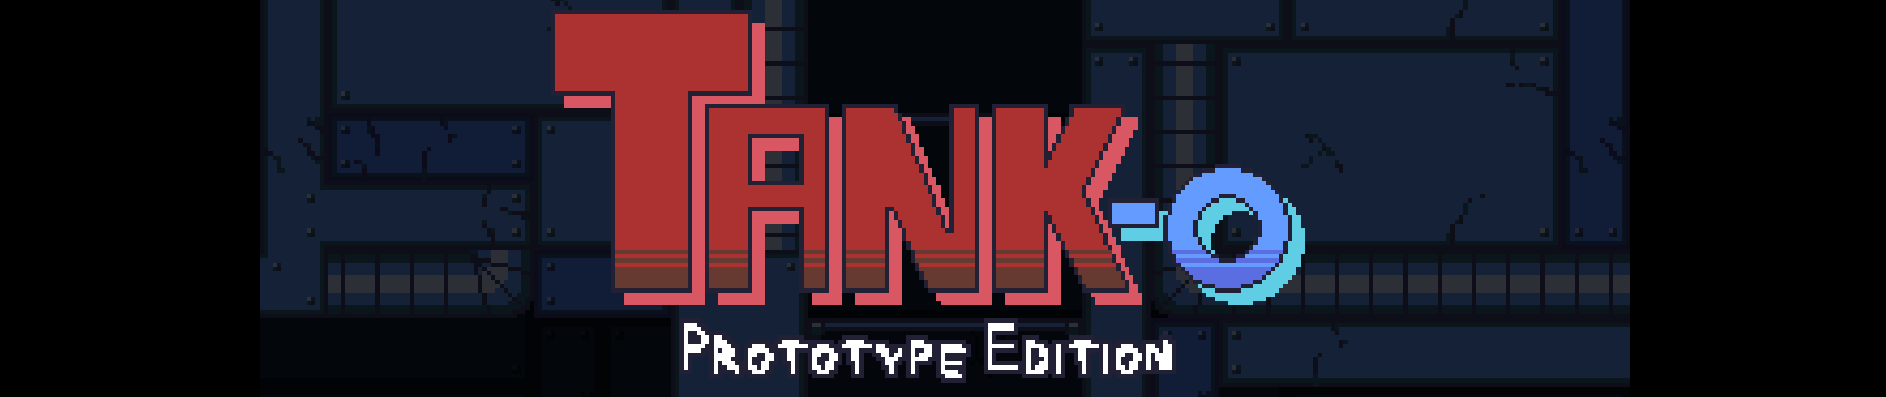 Tank-o: Prototype Edition